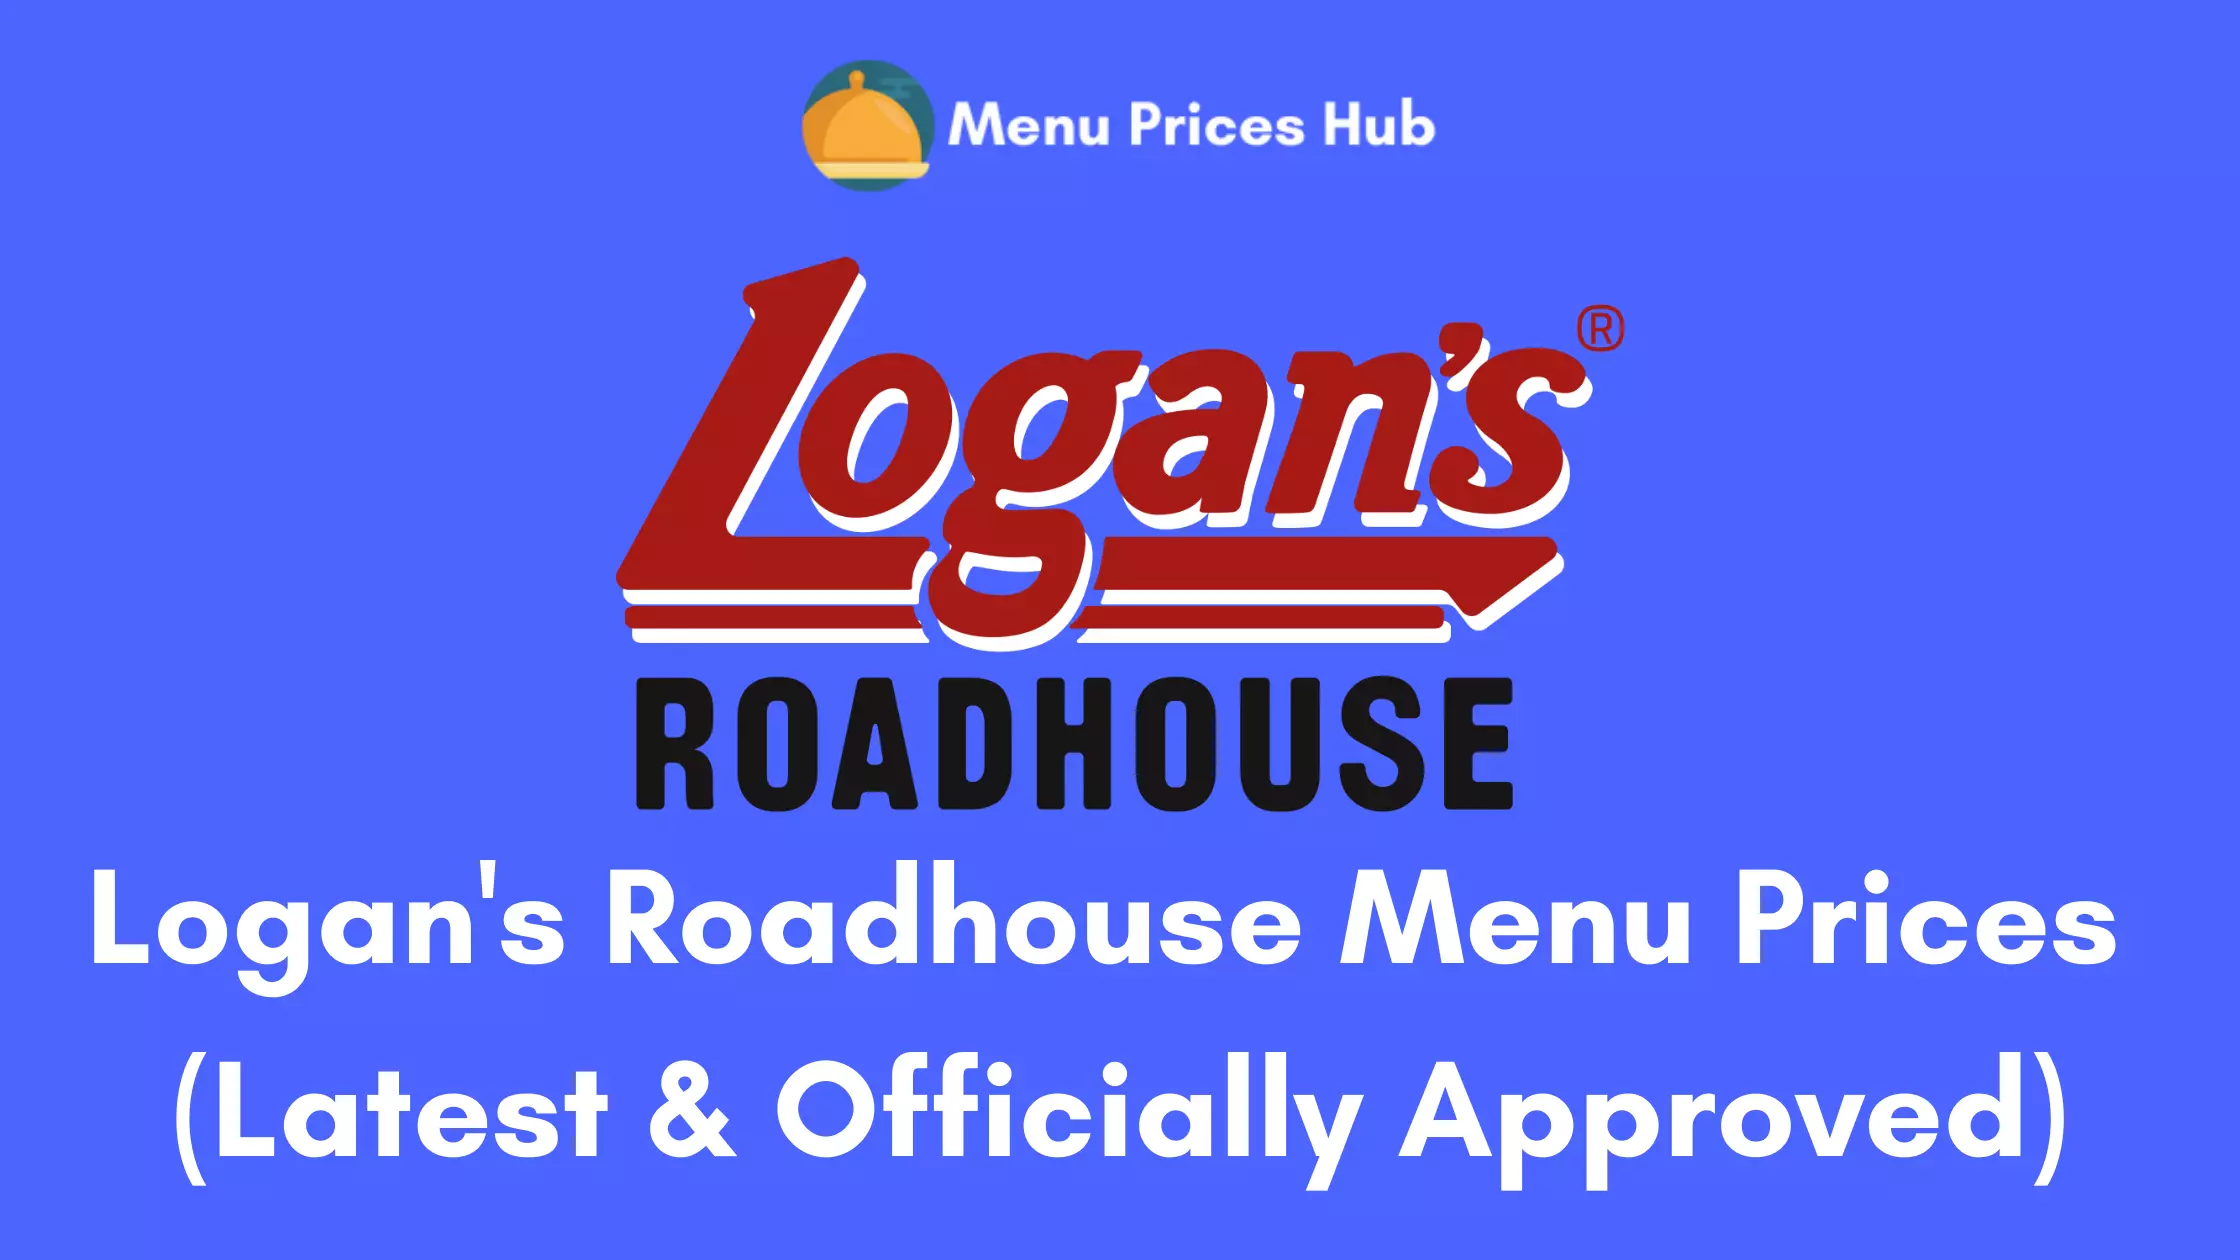 Logan's Roadhouse menu prices